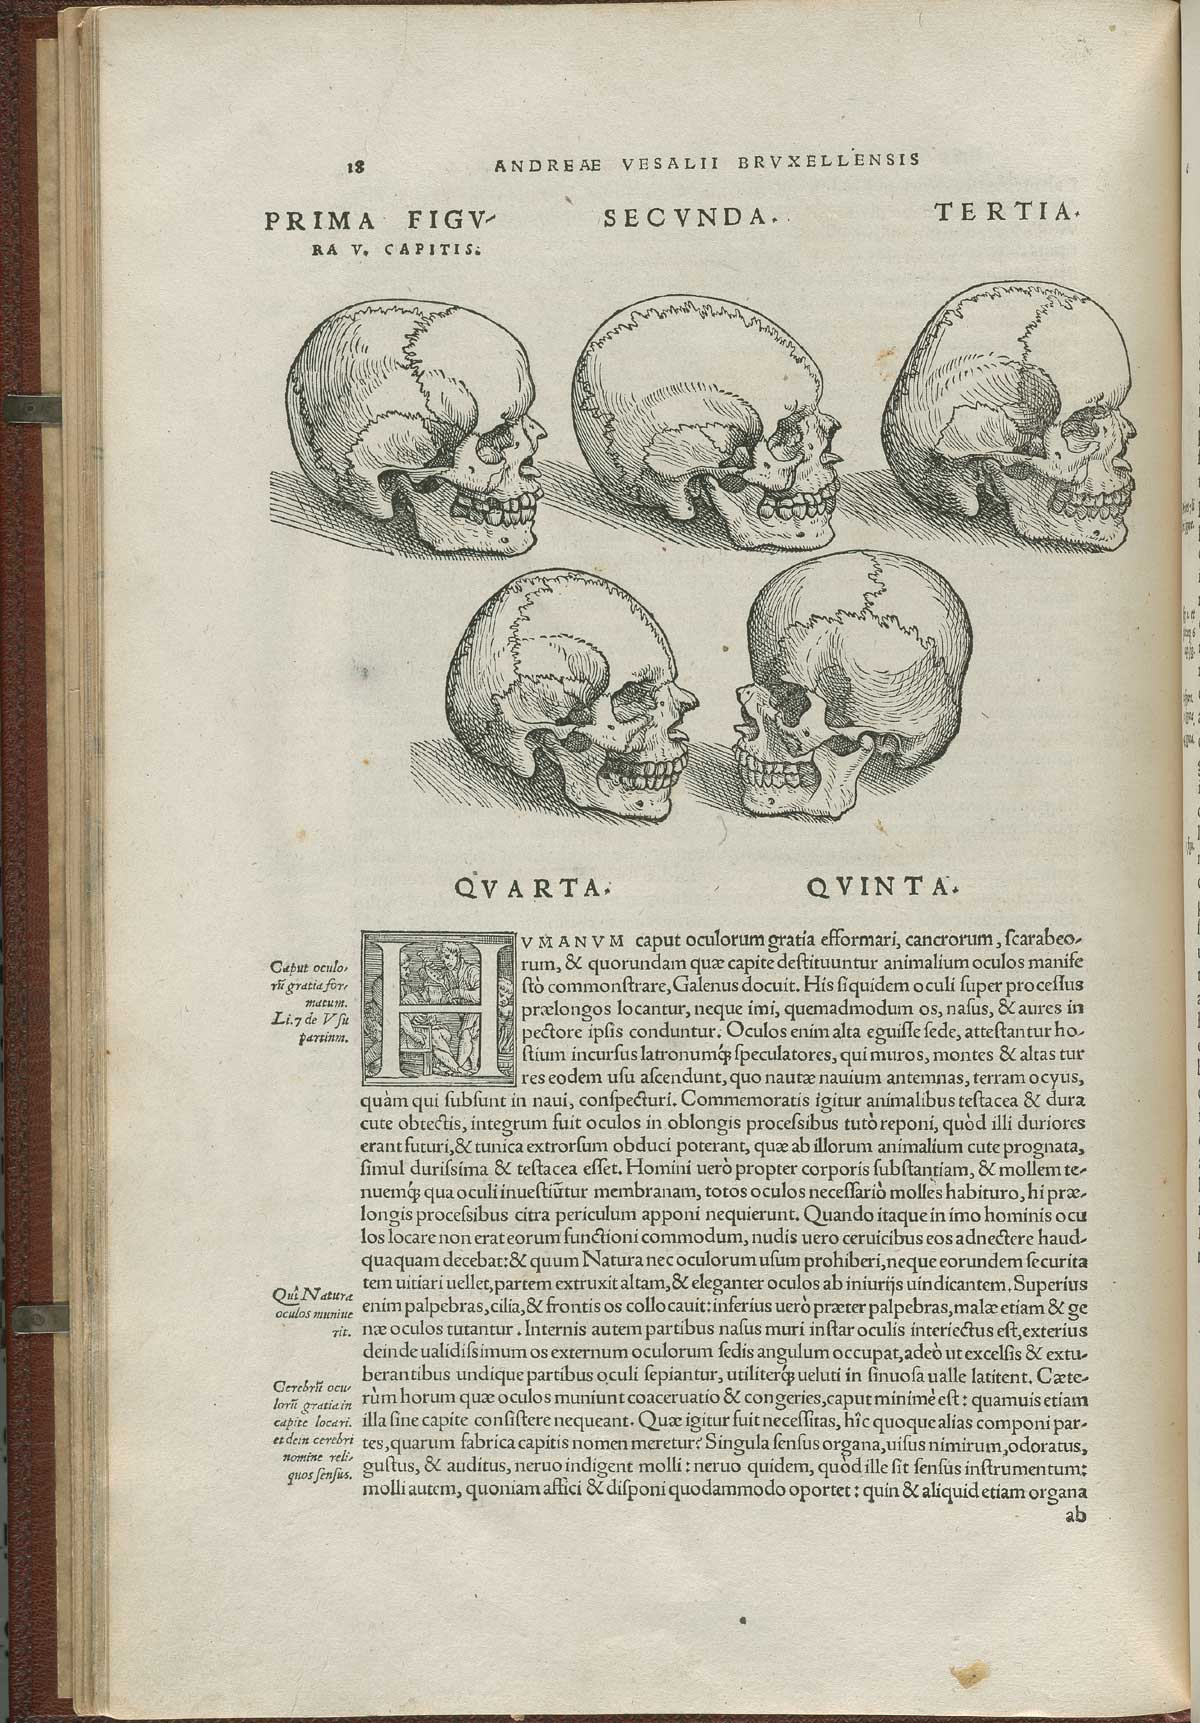 Page 18 of Andreas Vesalius' De corporis humani fabrica libri septem, featuring the five malformations of the skull.